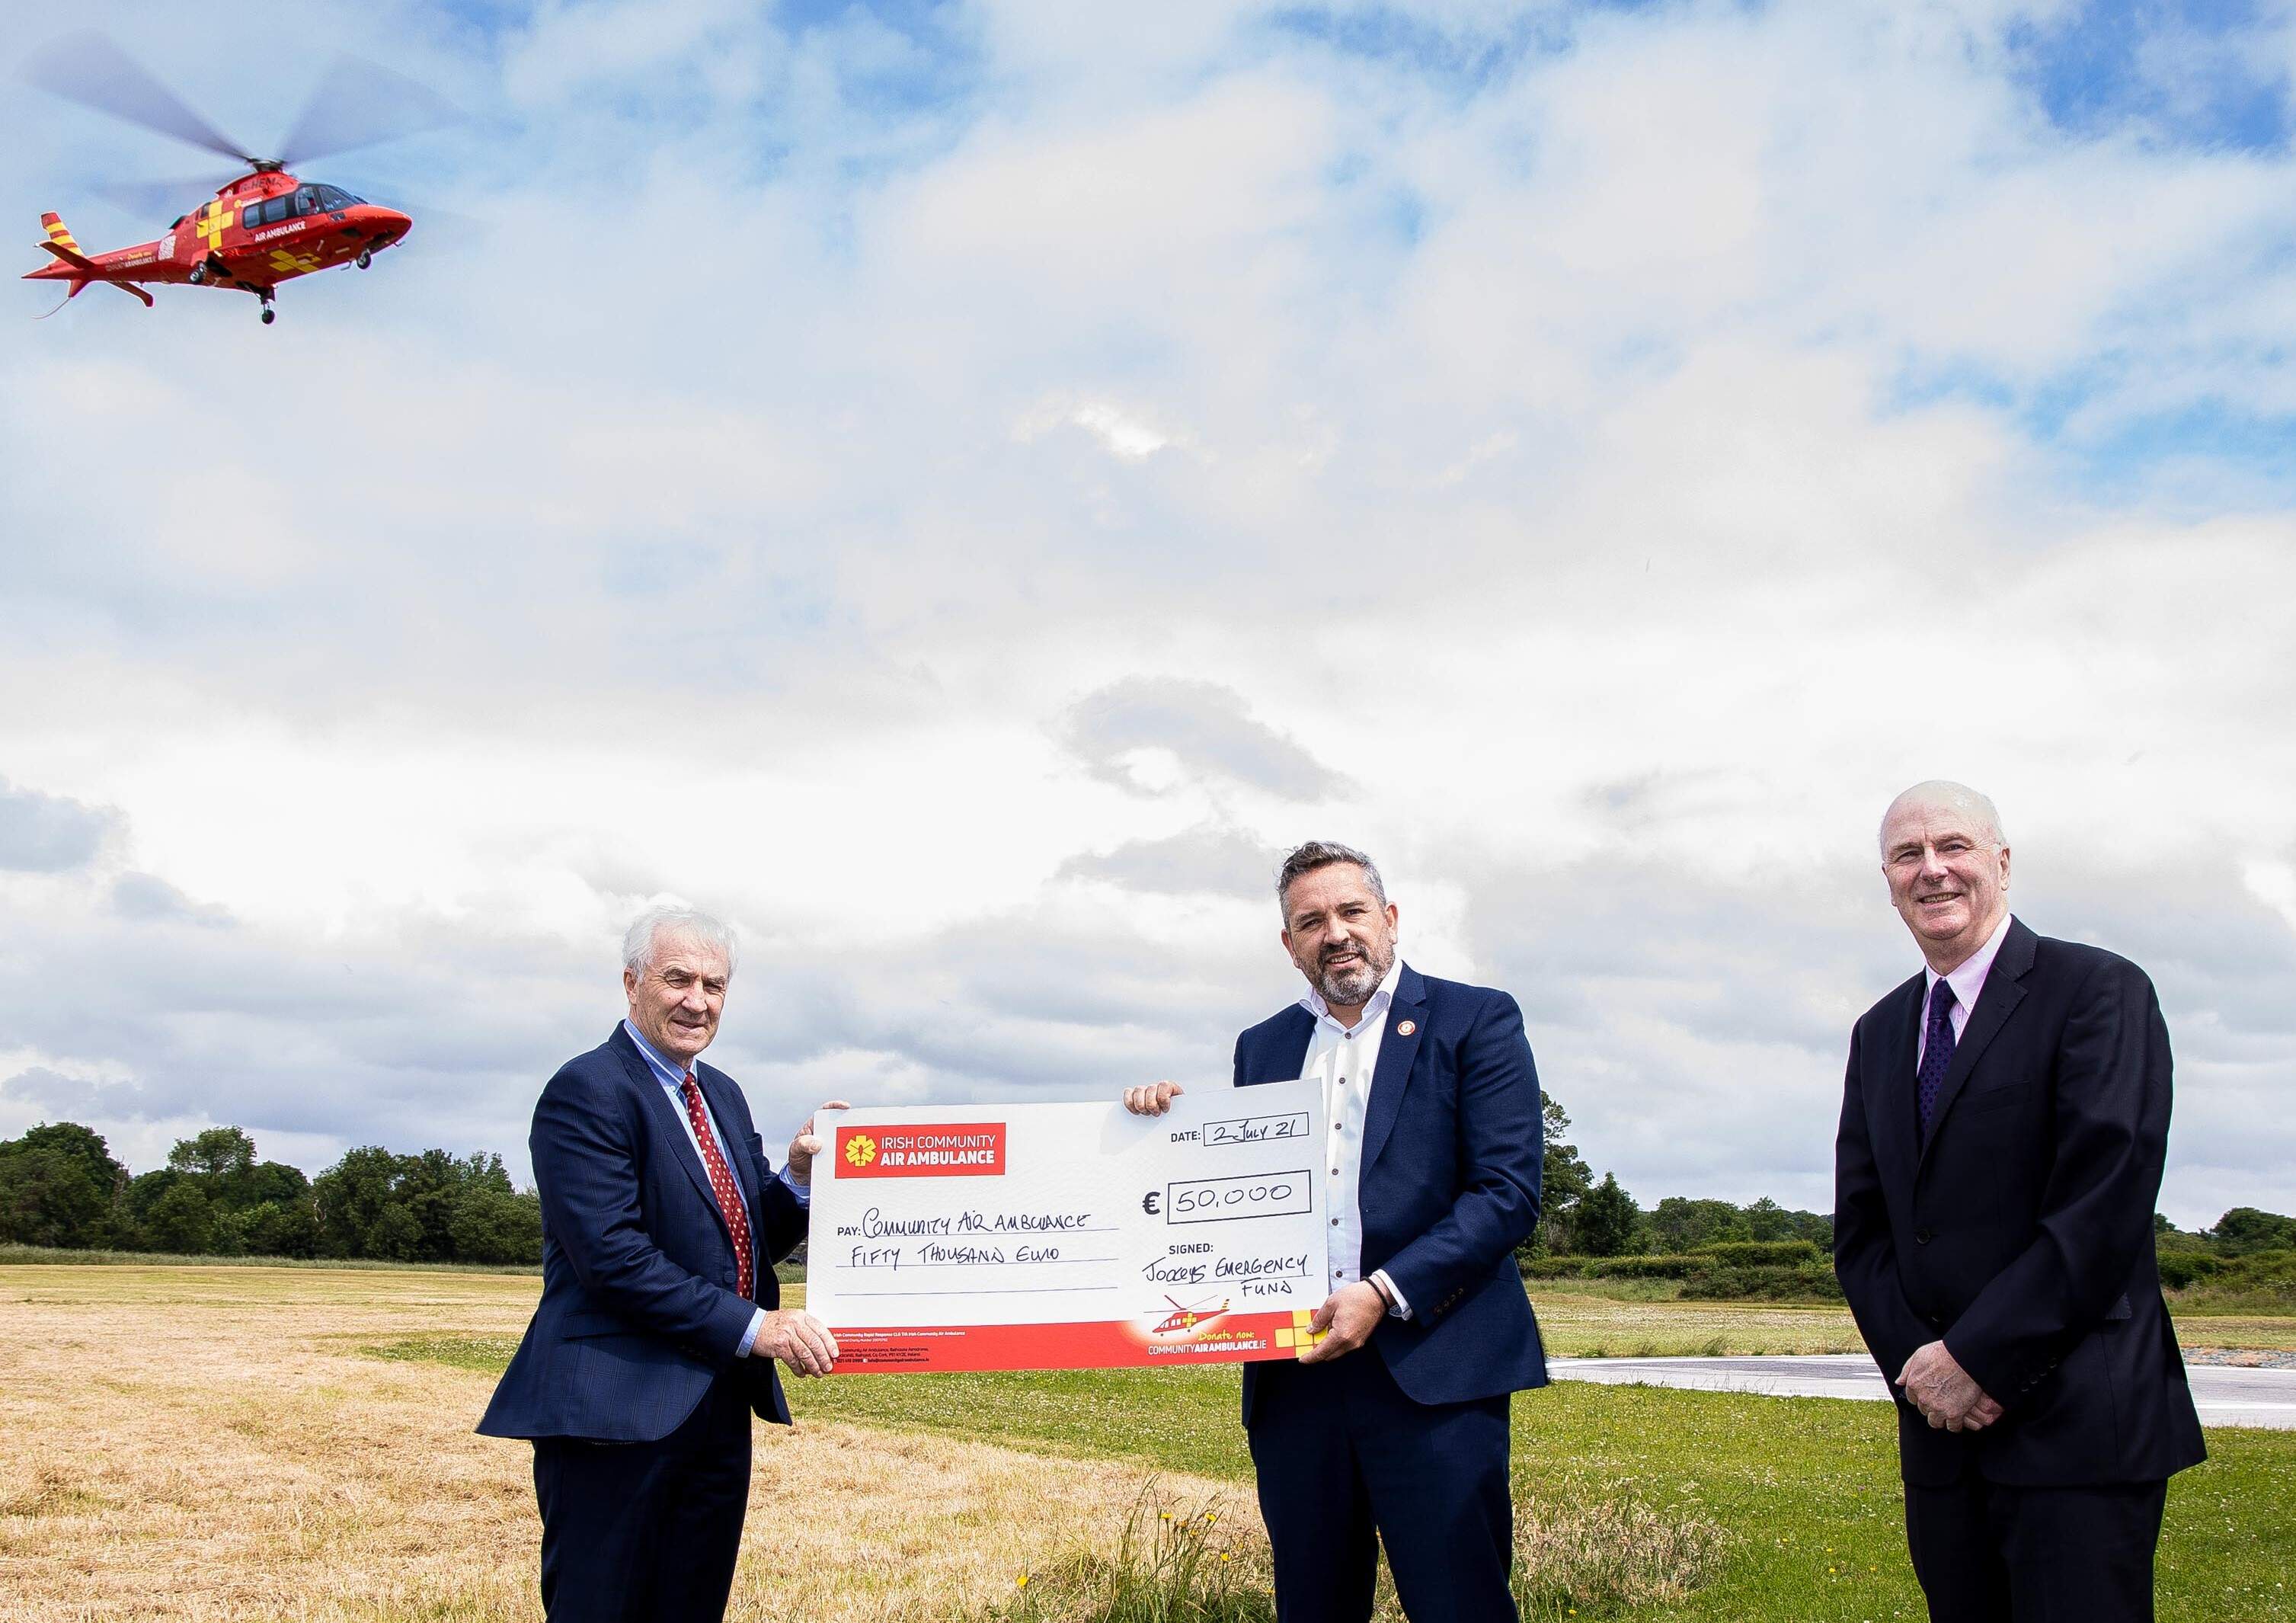 JOCKEYS EMERGENCY FUND MAKES €50,000 DONATION TO IRISH COMMUNITY AIR AMBULANCE SERVICE